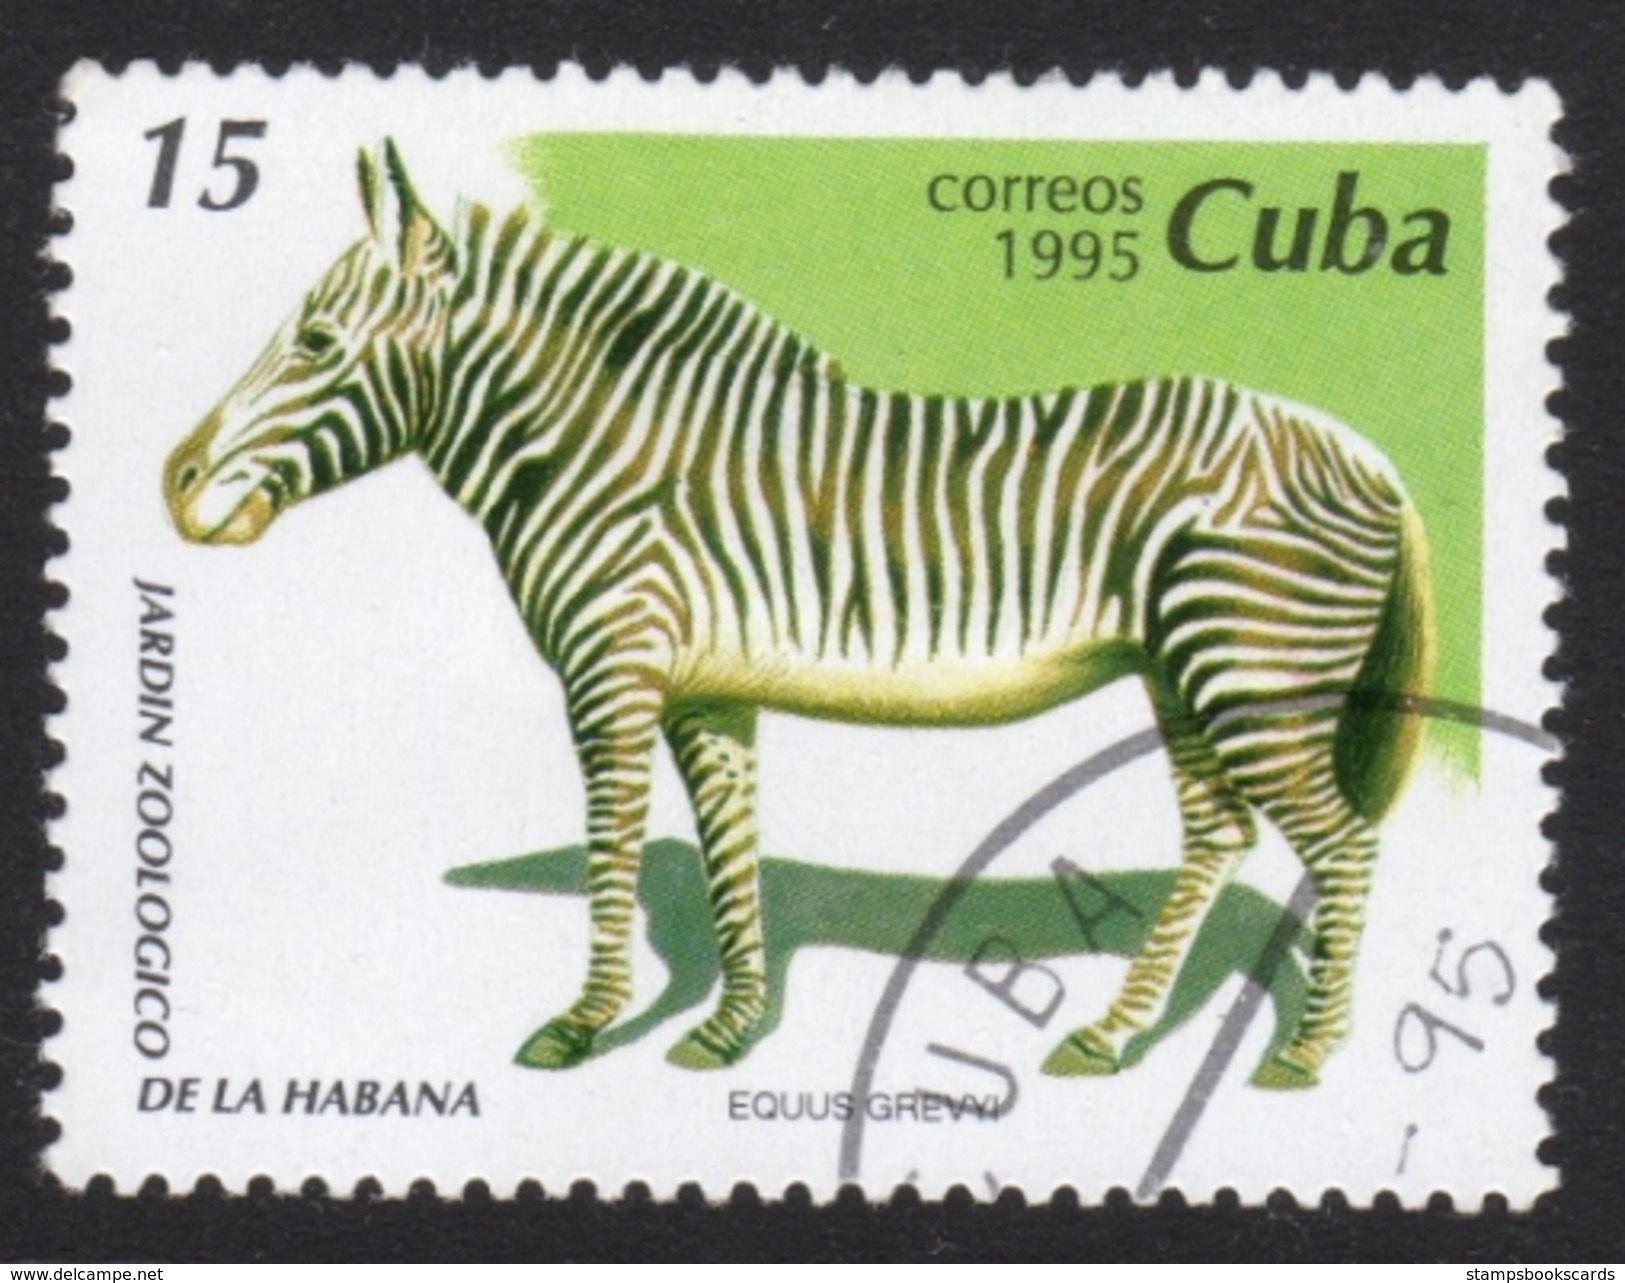 Zebra Stamp - Game